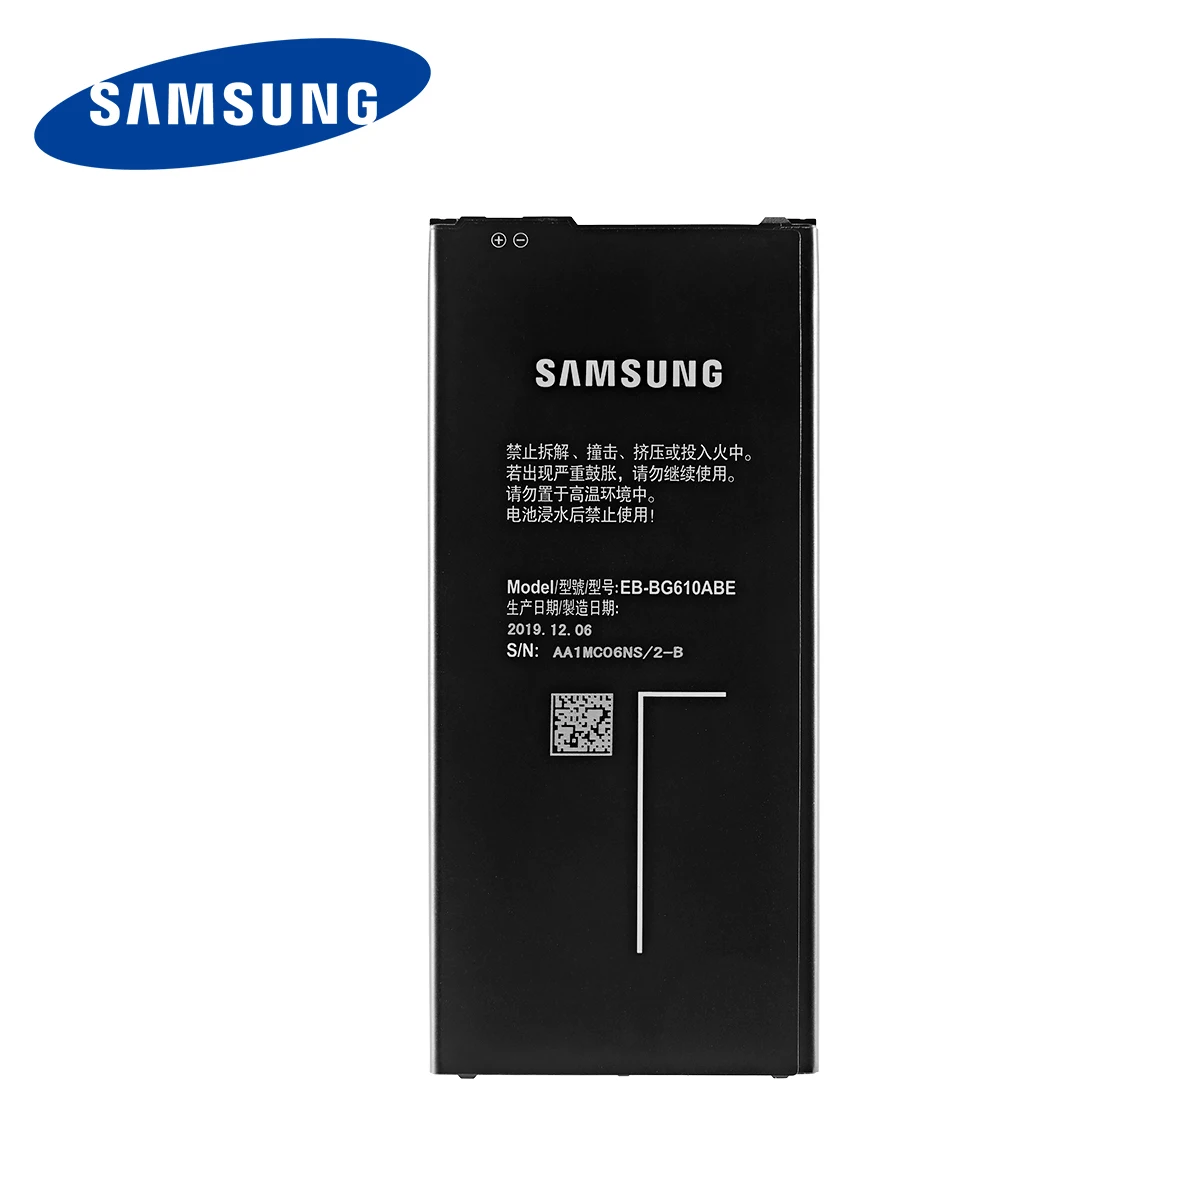 Originalni SAMSUNG EB-BG610ABE 3300mAh Baterija Za Samsung Galaxy J7 Prime On7 2016 G610 G615 G6100 J7 Prime 2 J7 Max Mobilni Telefon